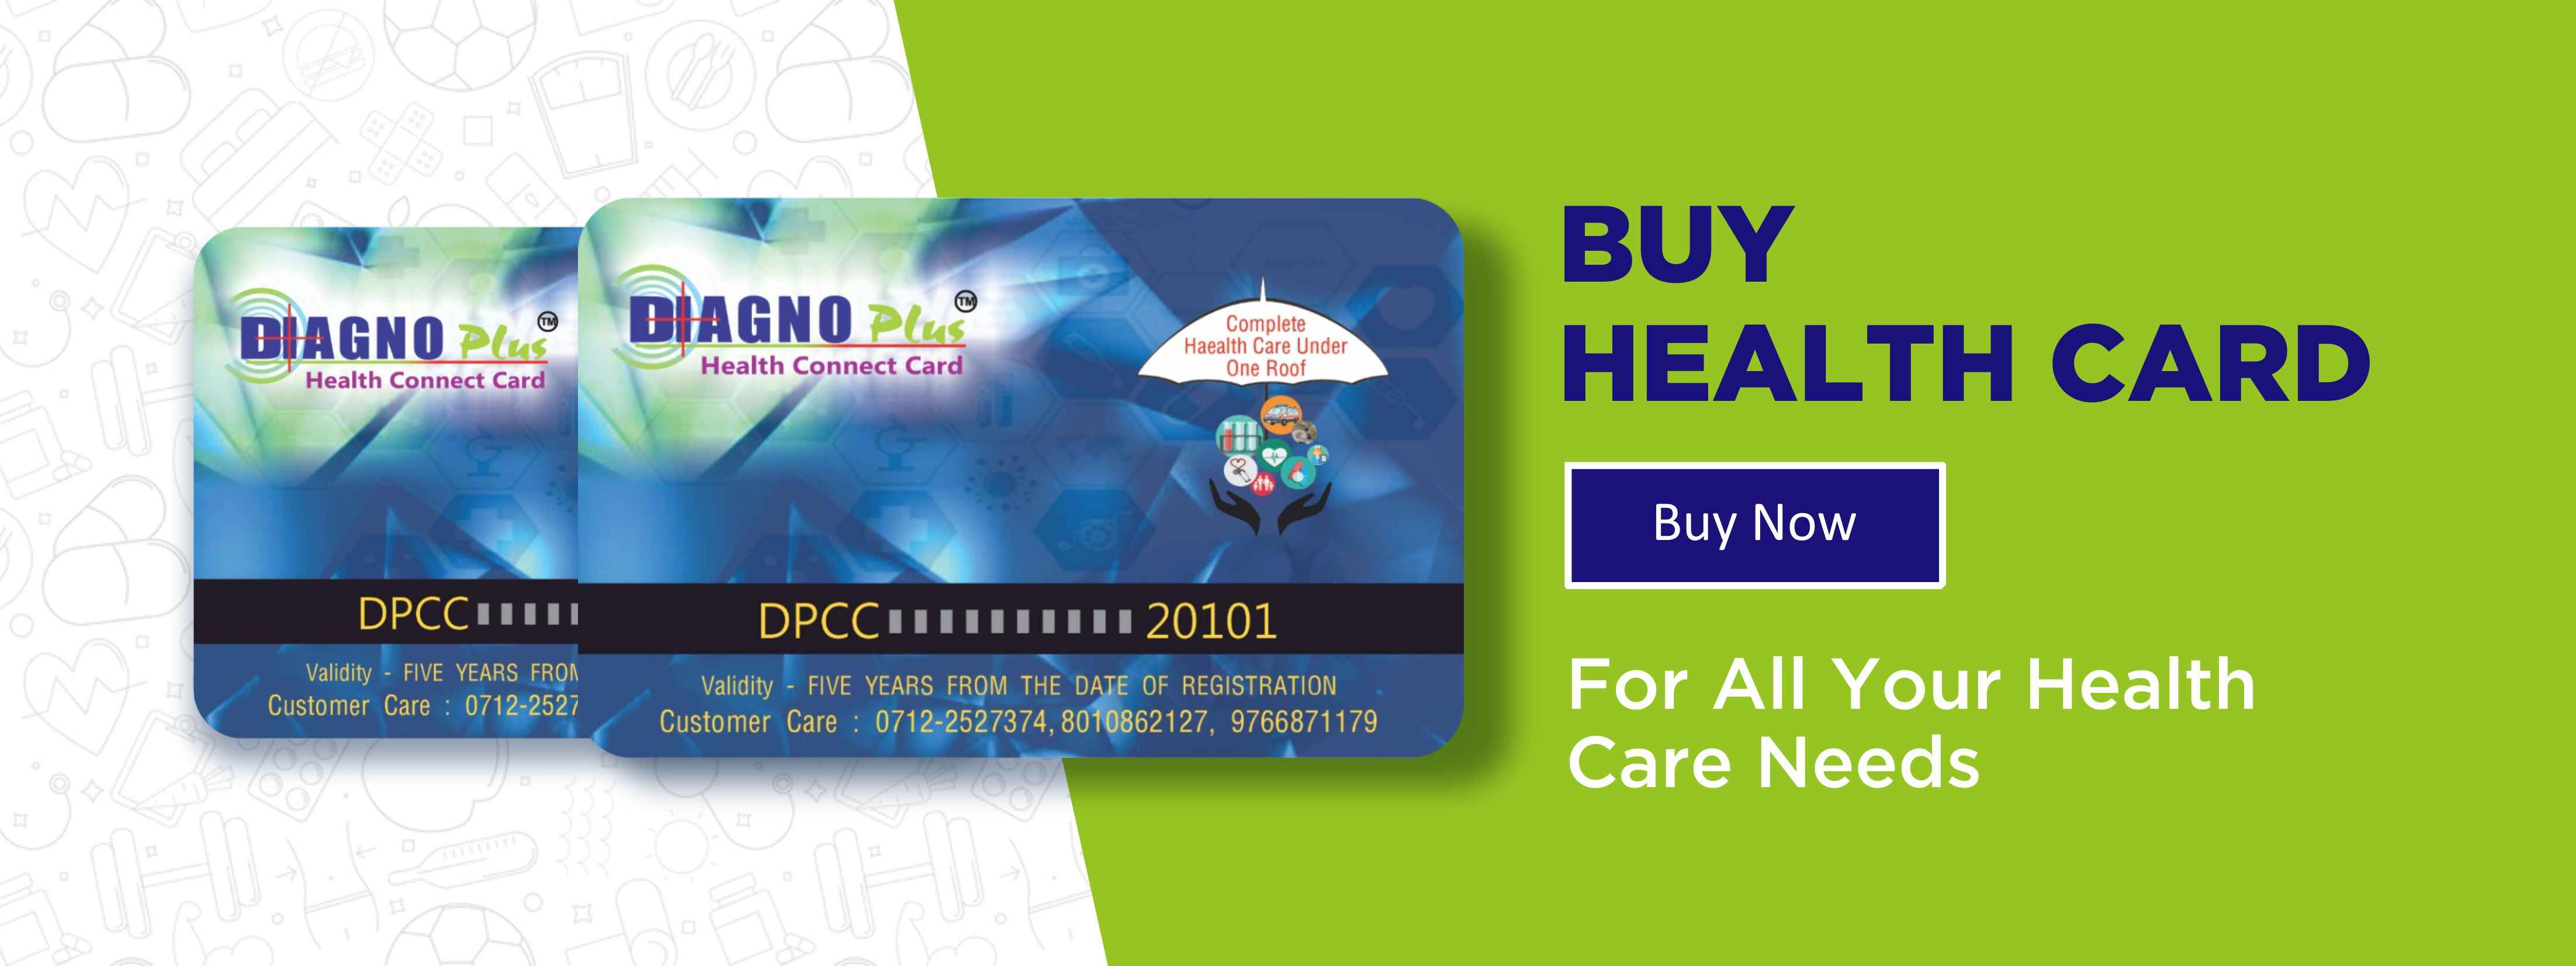 Health card service in nagpur